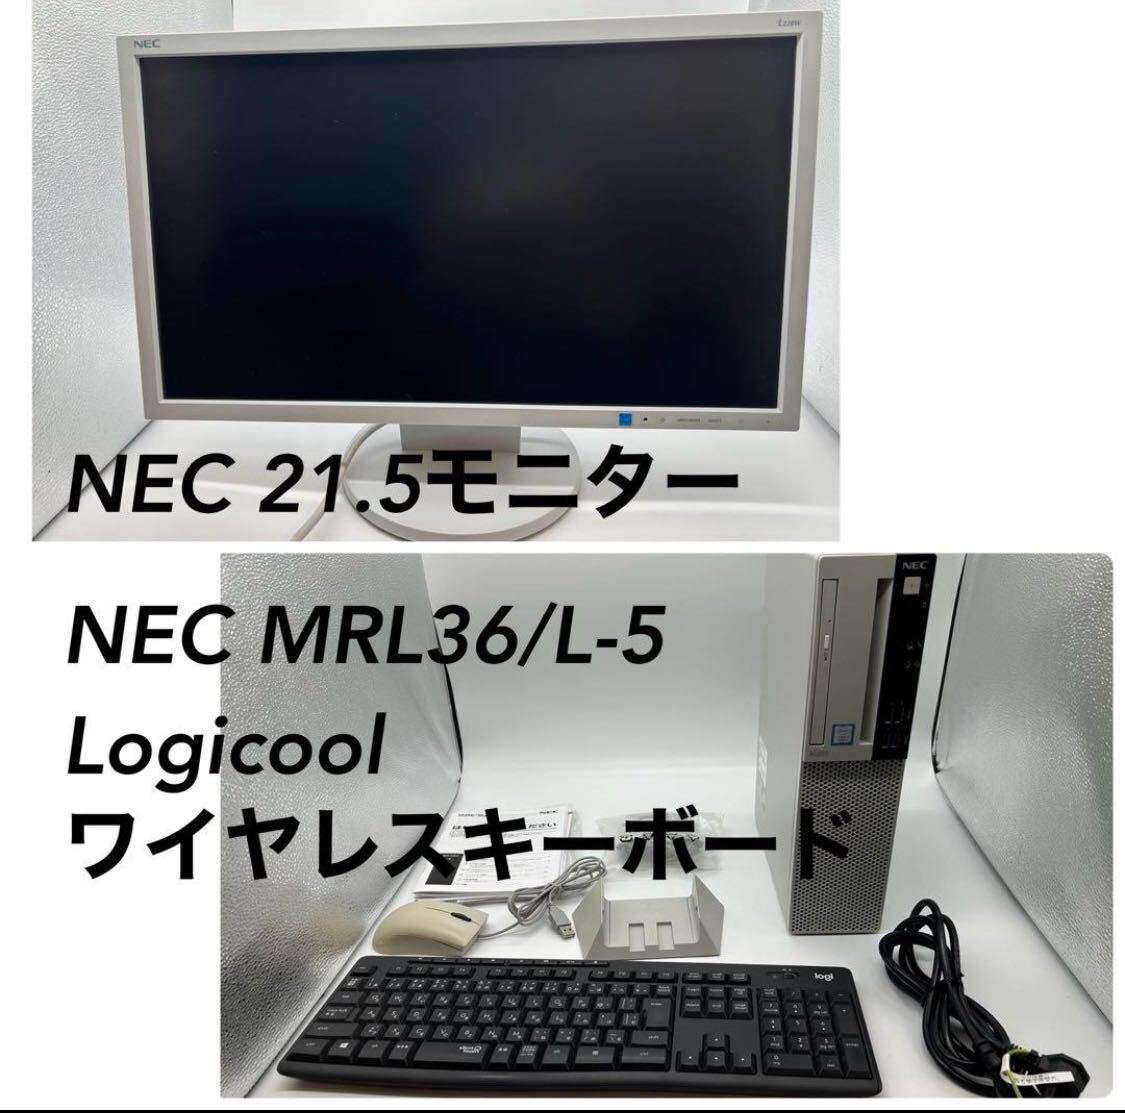 NEC パソコン モニター、キーボードセットMRL36/L-5、L220W 21.5インチの画像1